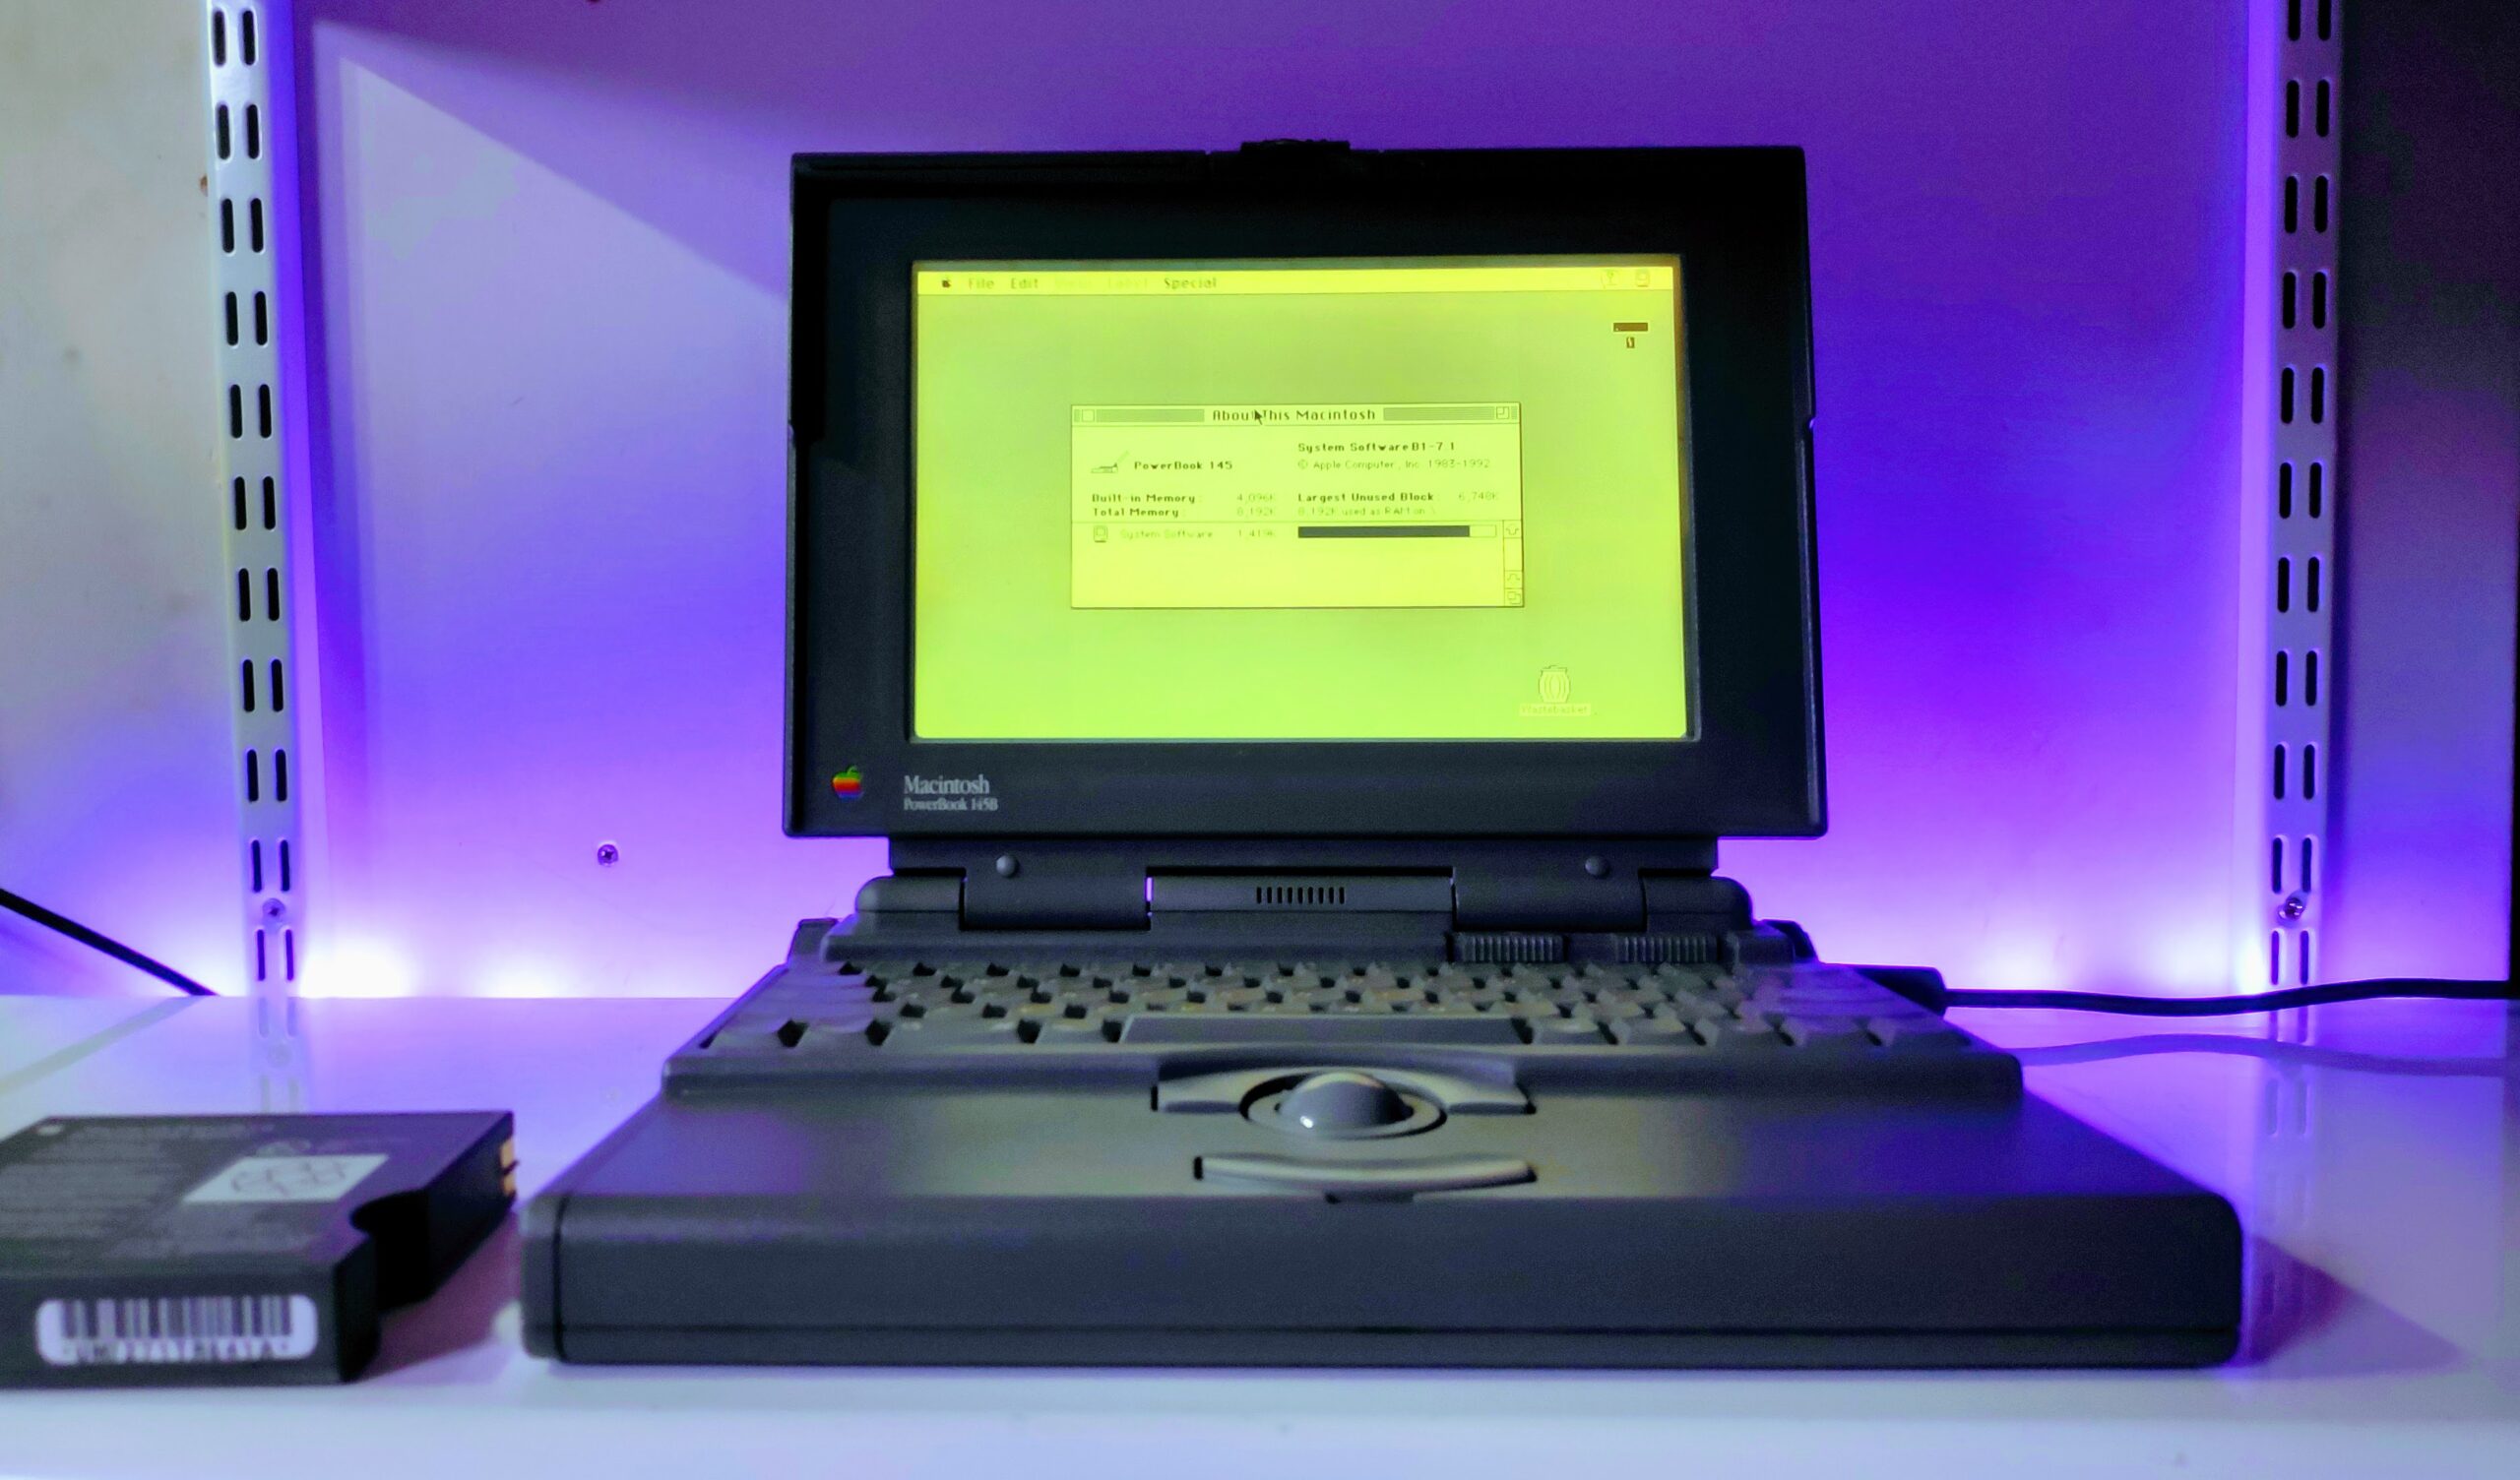 Original Apple Powerbook 145B Retro Laptop(Working) - RetroNerd ...